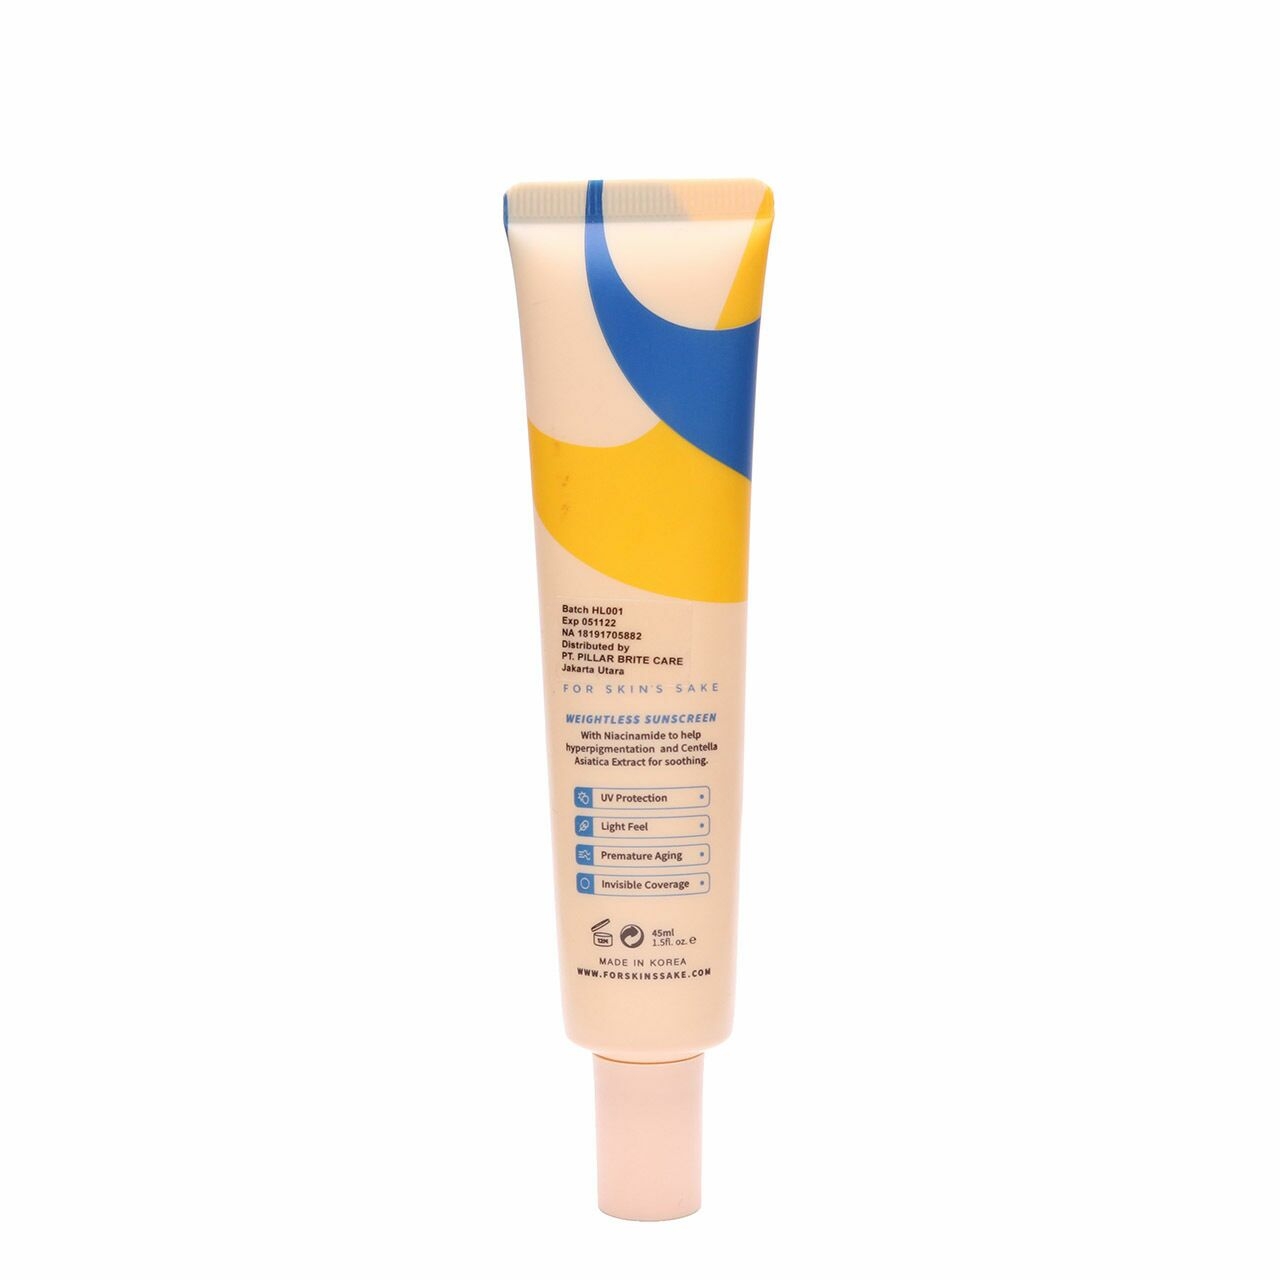 For Skin's Sake Protect Weightless Sunscreen SPF 50 PA++++ Skin Care